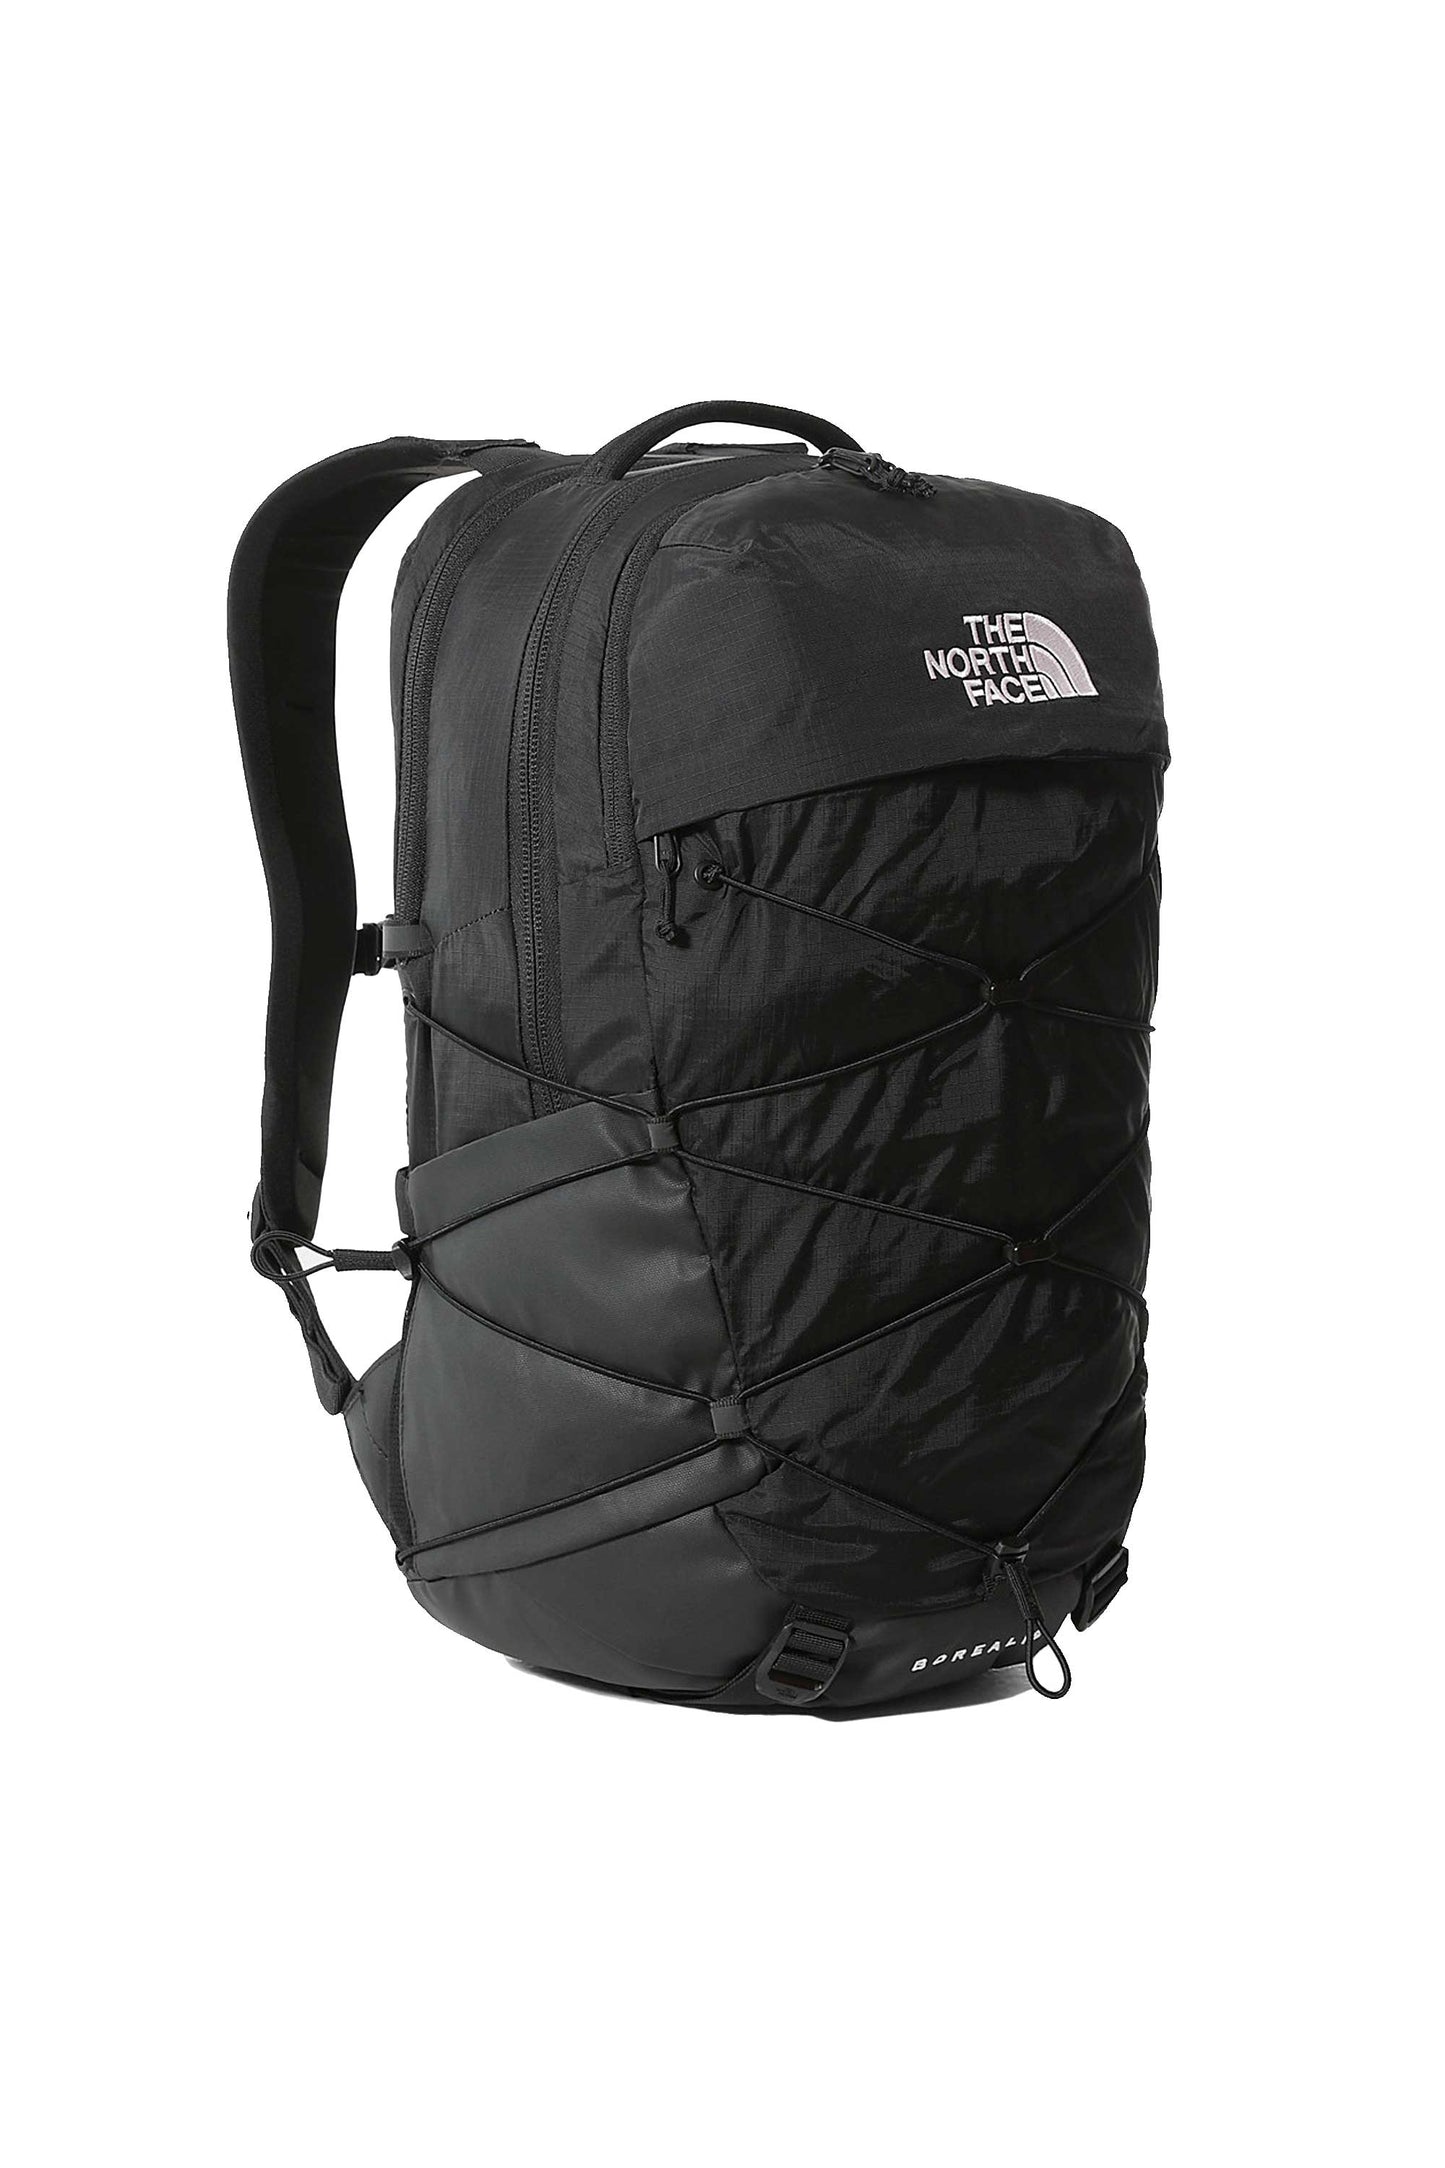 Pukas-Surf-Shop-the-north-face-backpack-borealis-black